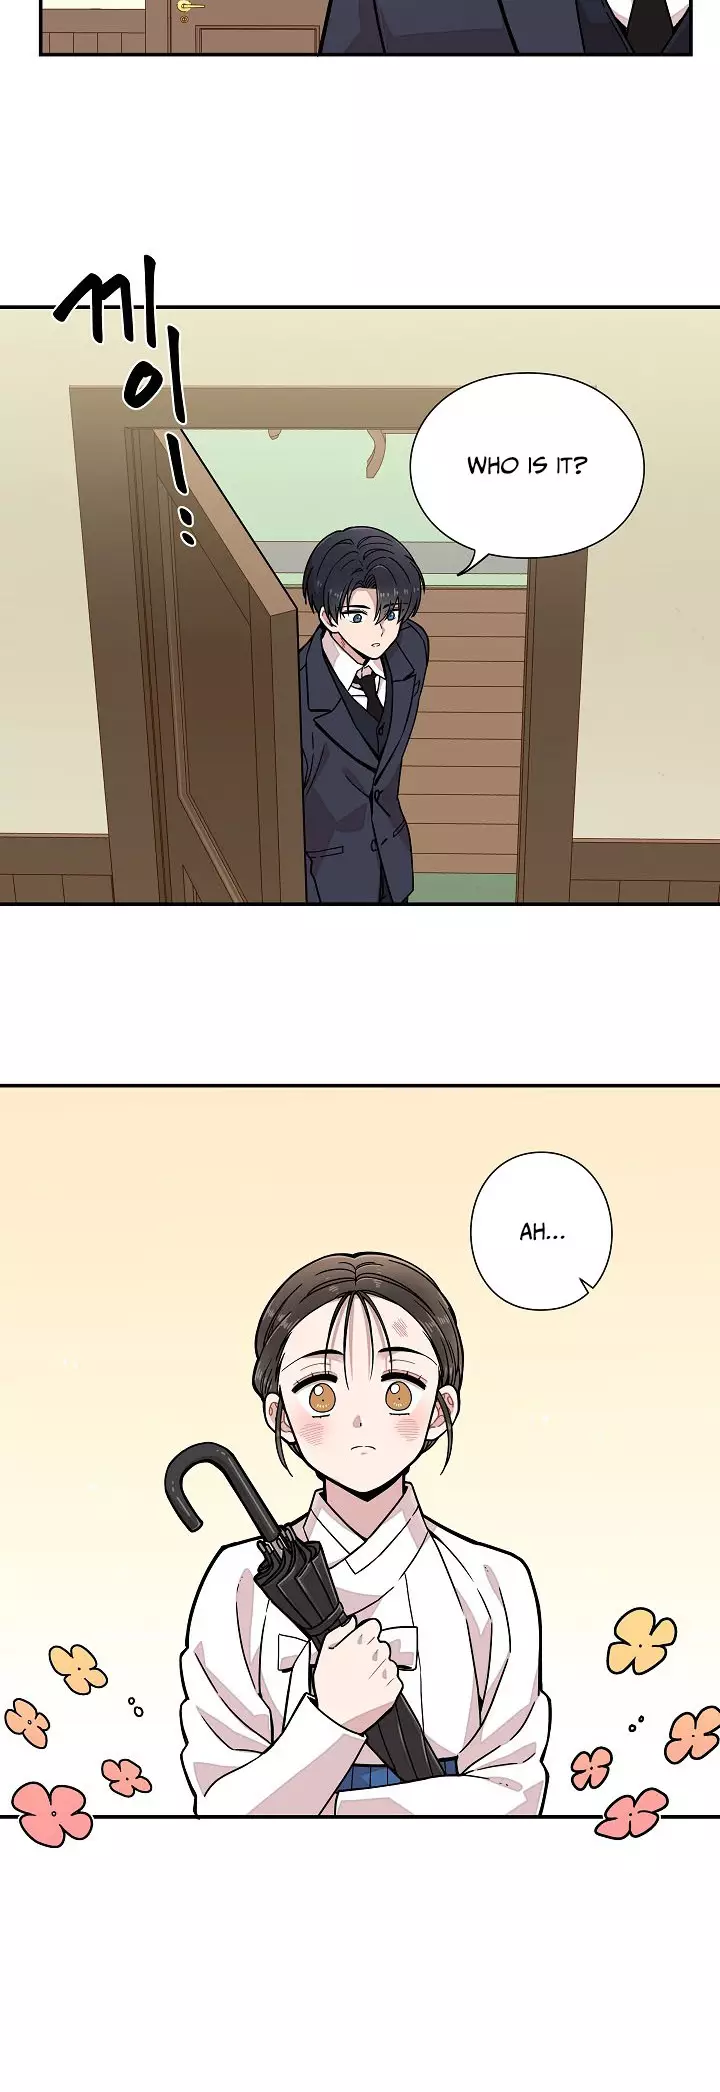 Gyeongseong Detective Agency - 2 page 6-17c8254d